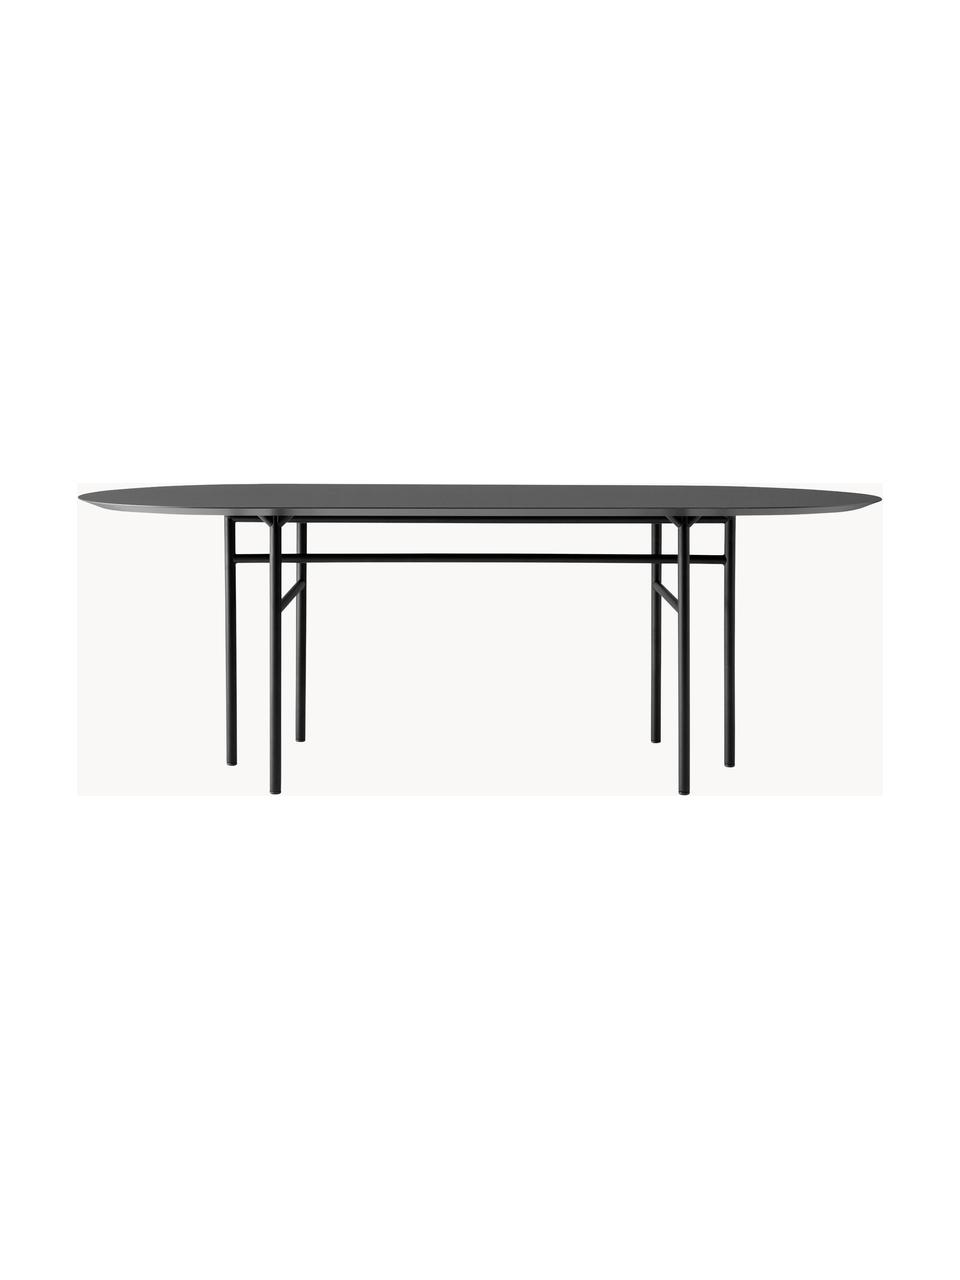 Oválny jedálenský stôl Snaregade, 210 x 95 cm, Antracitová, čierna matná, Š 210 x H 95 cm